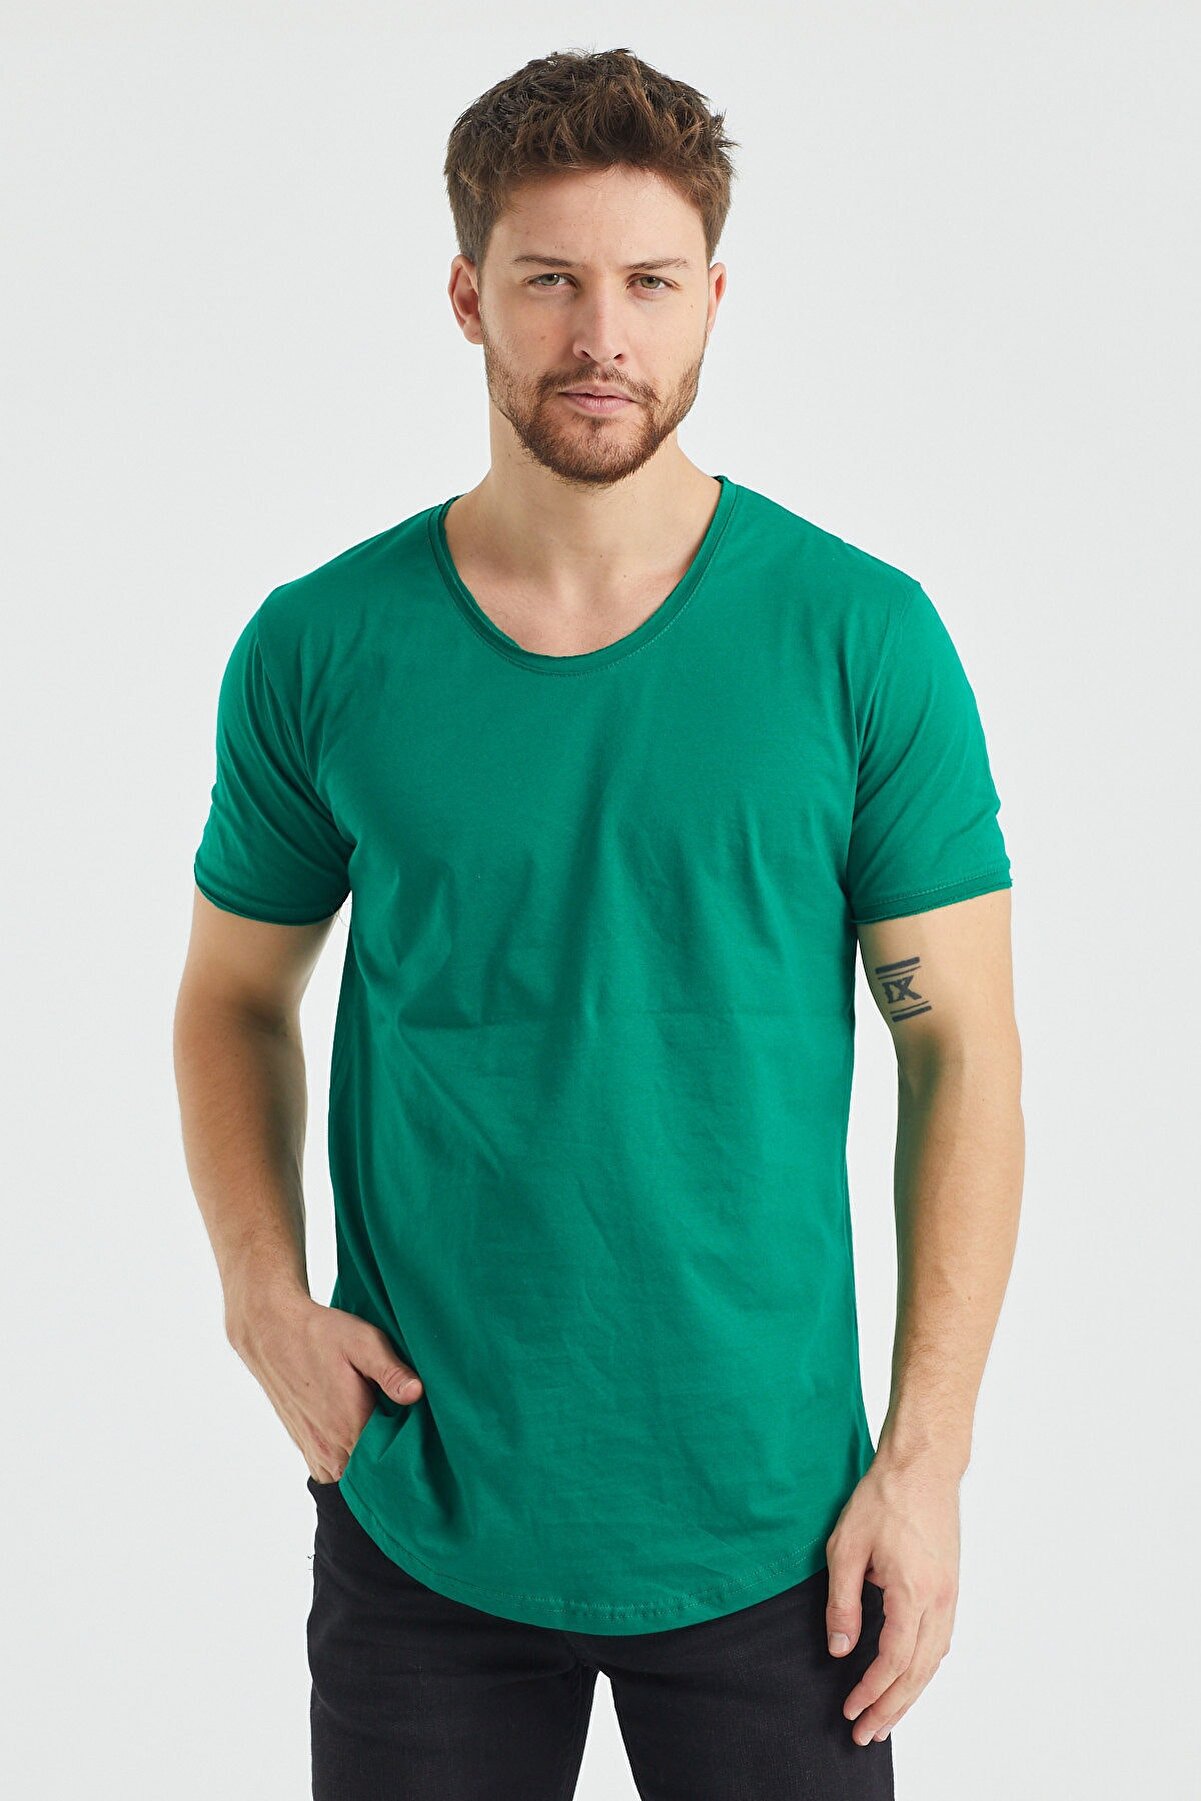 Tarz Cool Erkek Yeşil Çimen Yeşili Pis Yaka Salaş T-shirt